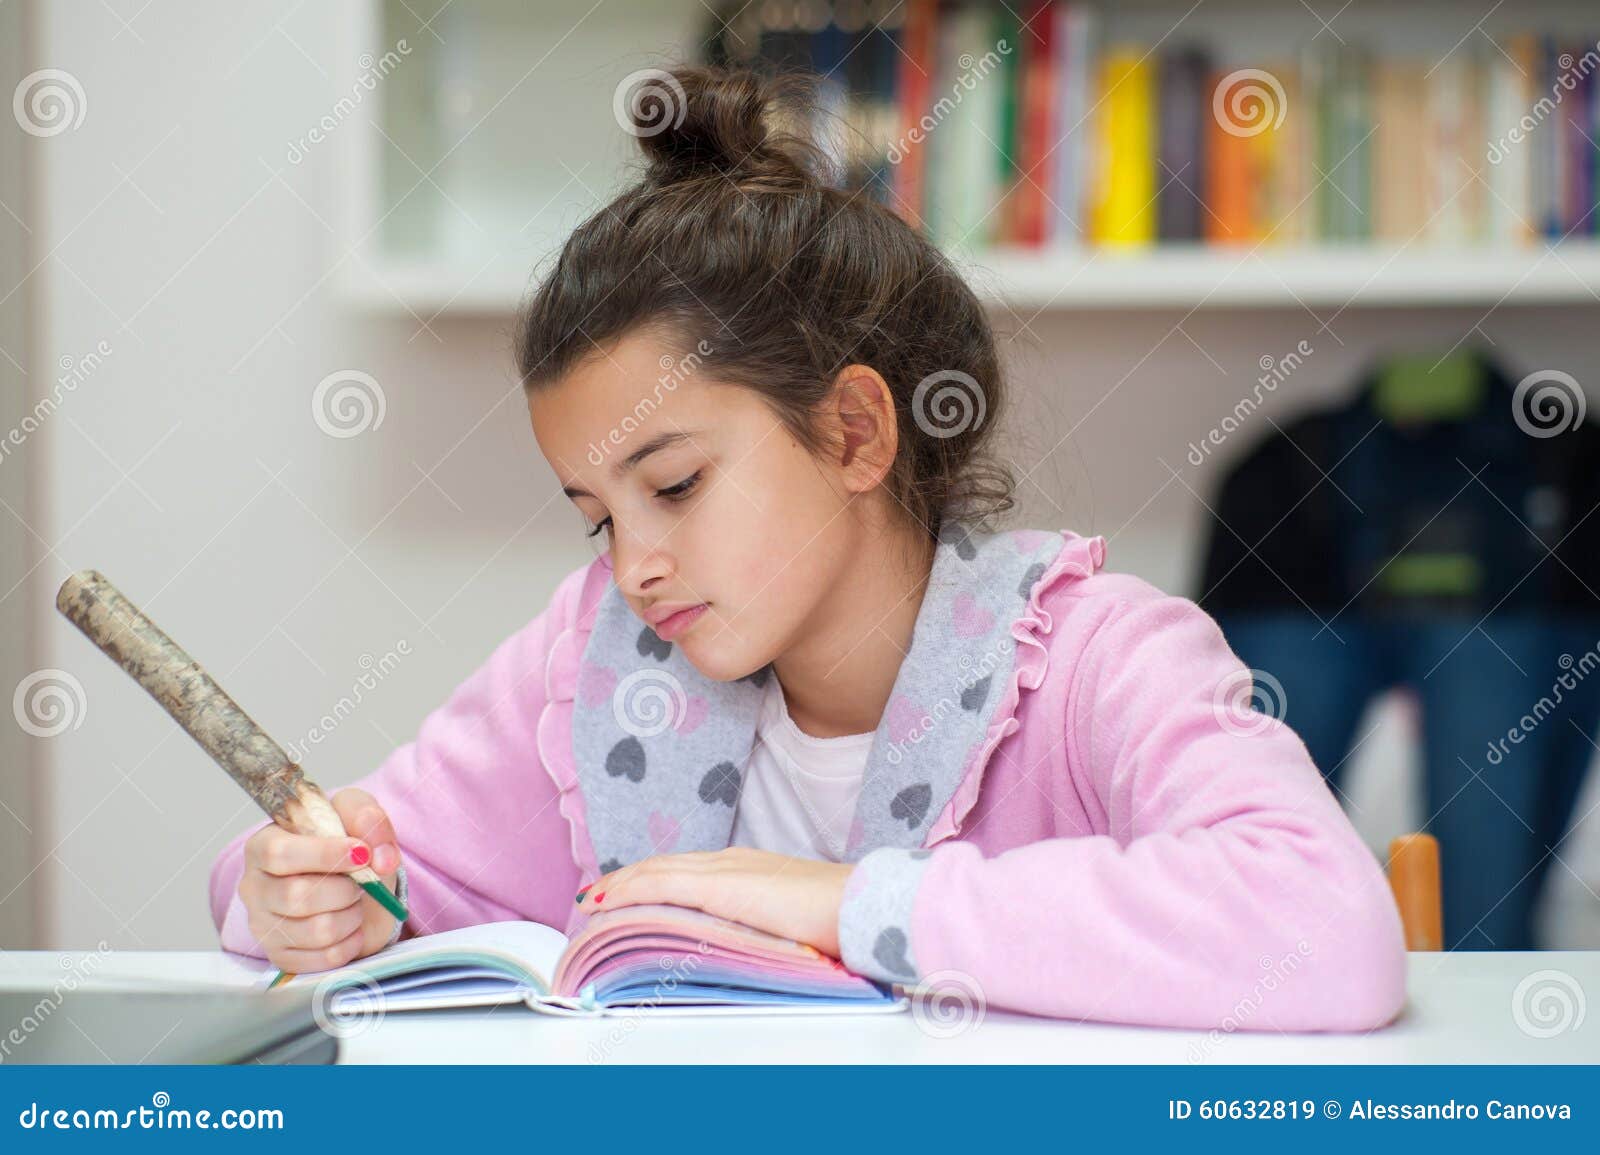 little girl writes on the school diary